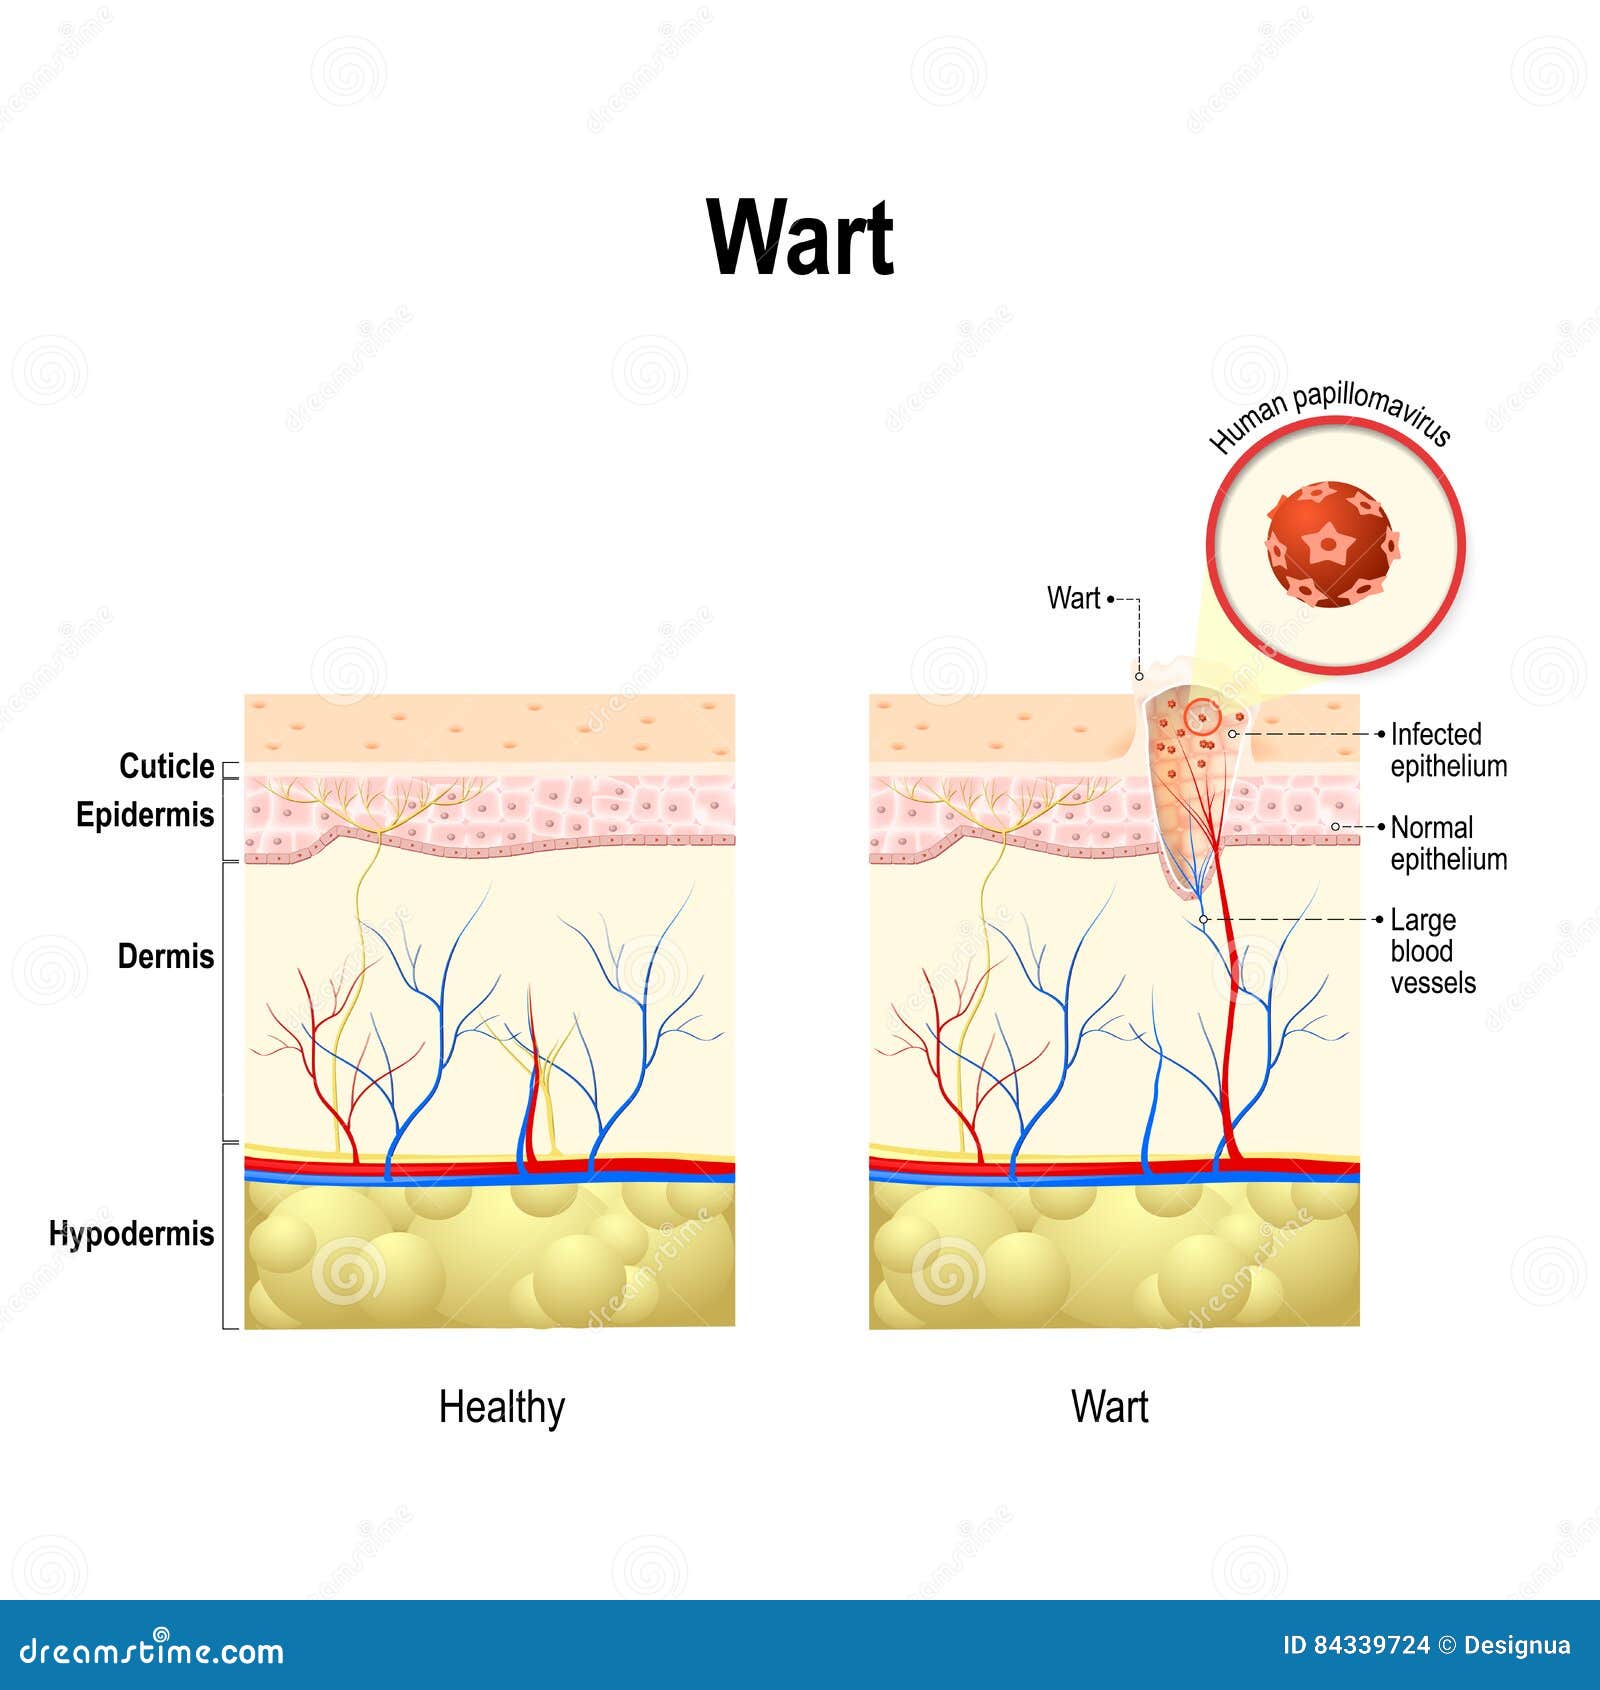 hpv virus that causes warts